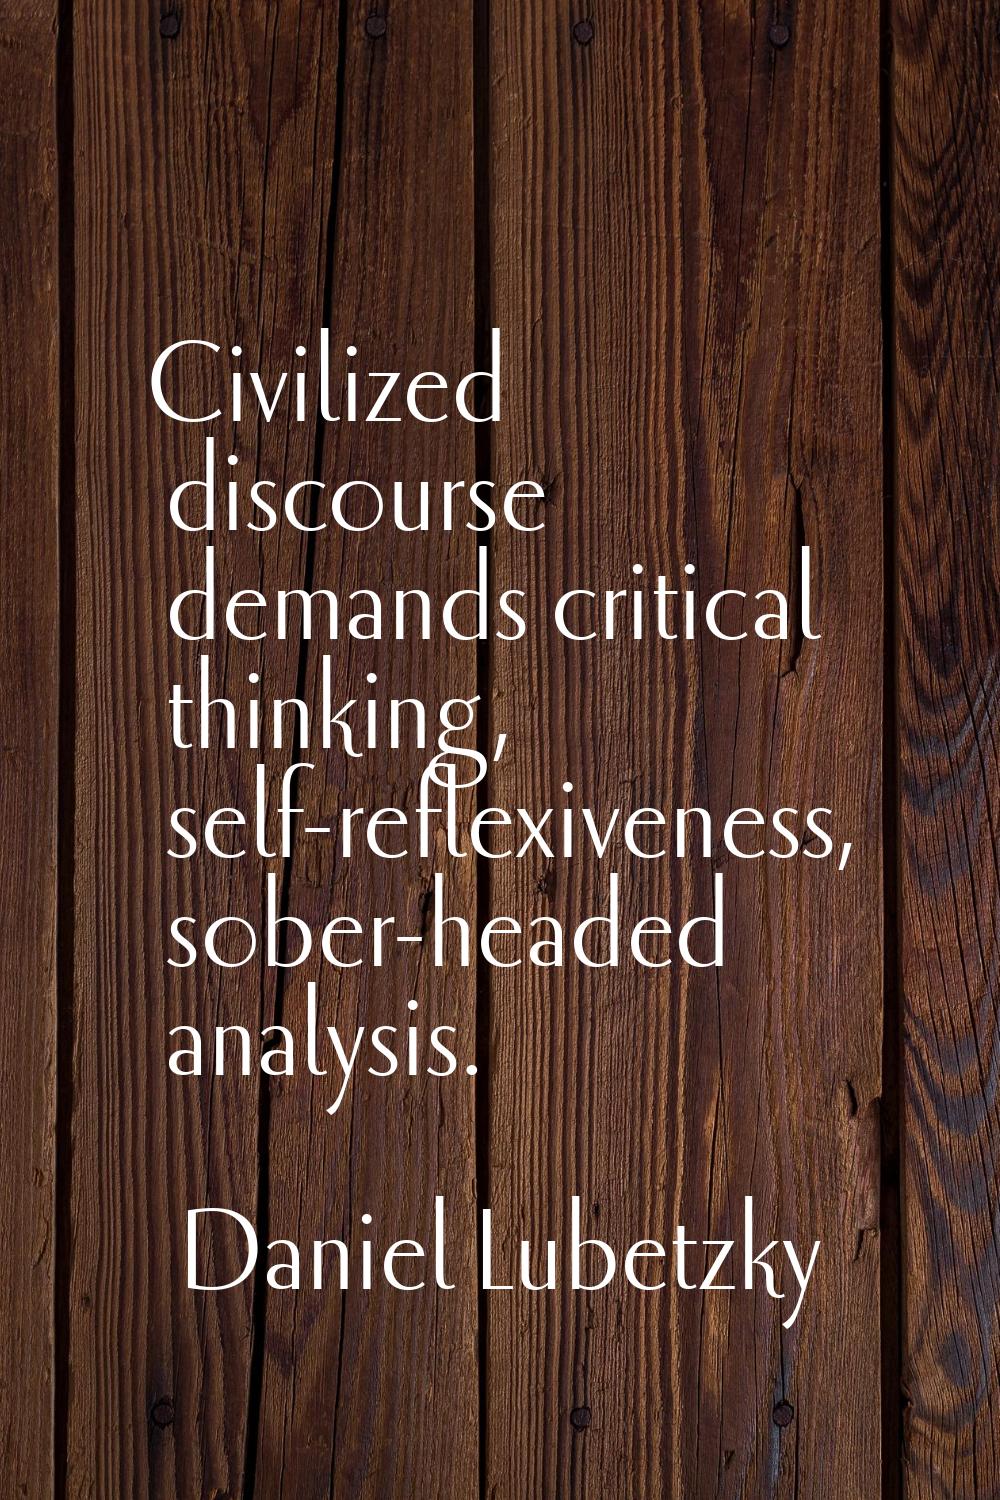 Civilized discourse demands critical thinking, self-reflexiveness, sober-headed analysis.